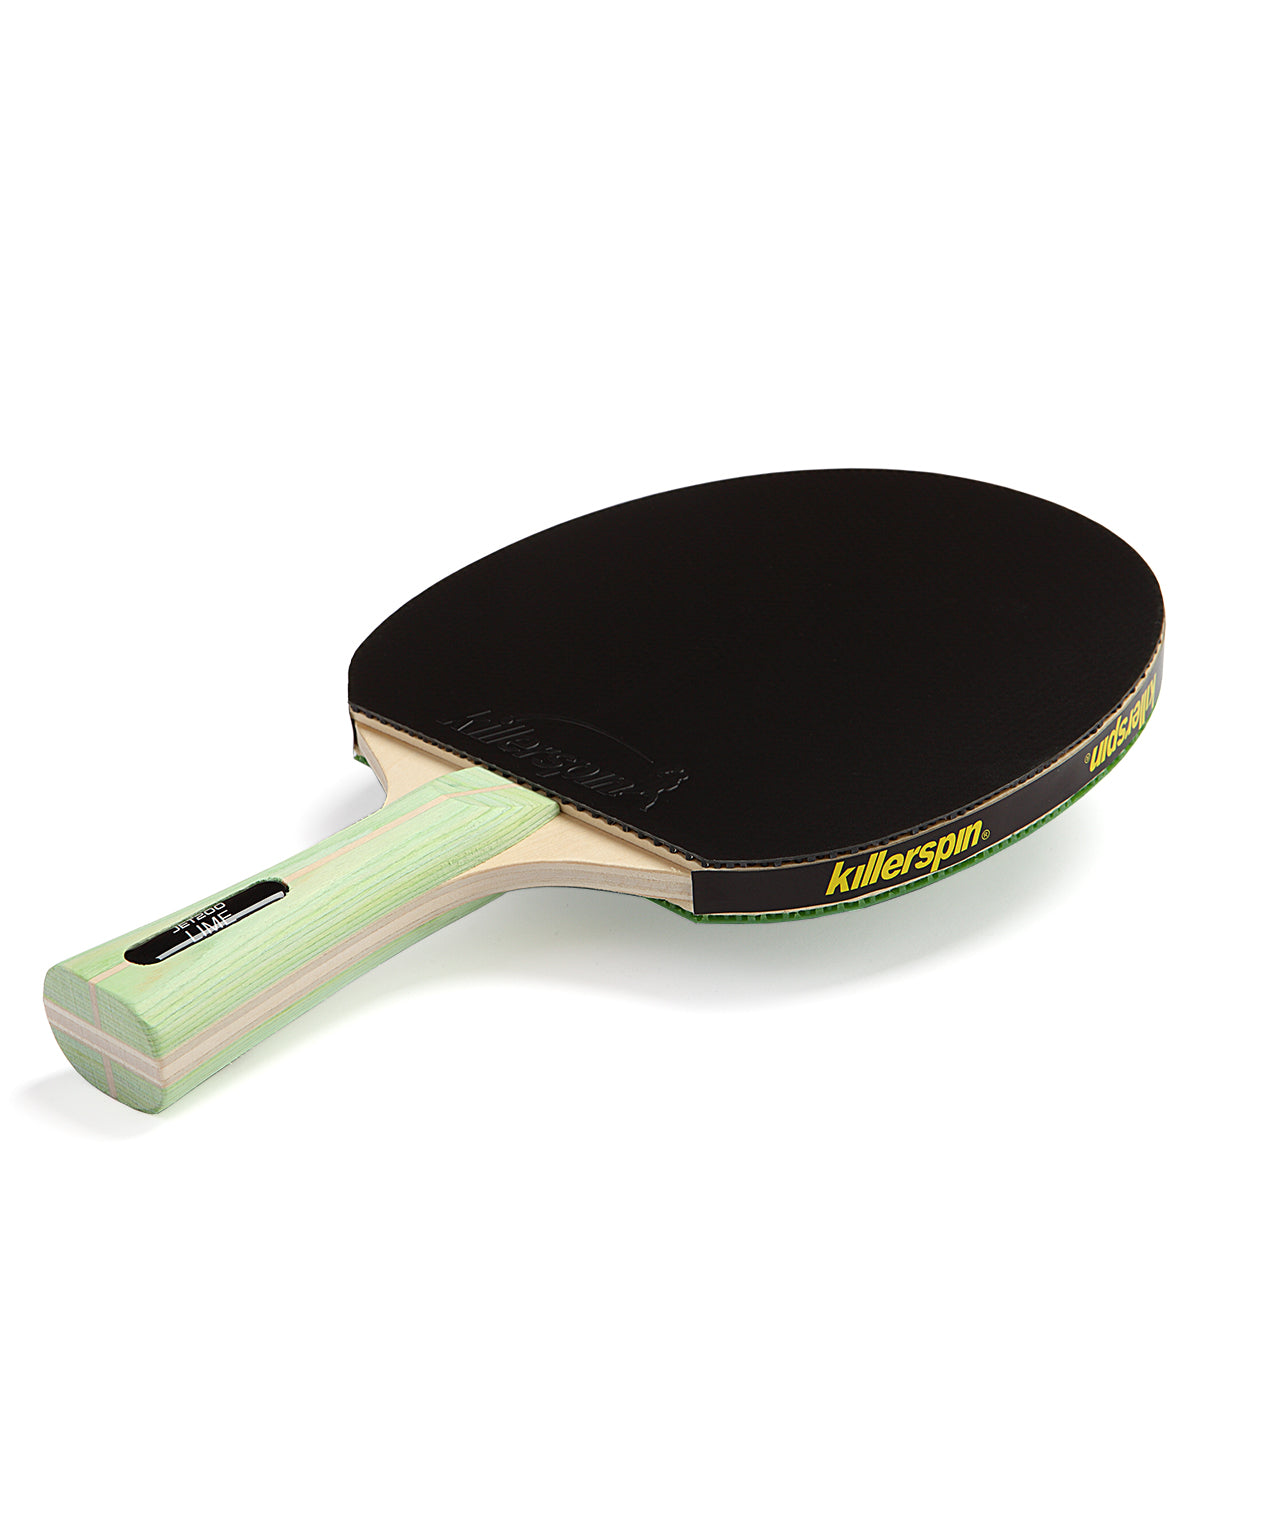 Killerspin Ping Pong Paddle Jet200 Lime - Black Rubber